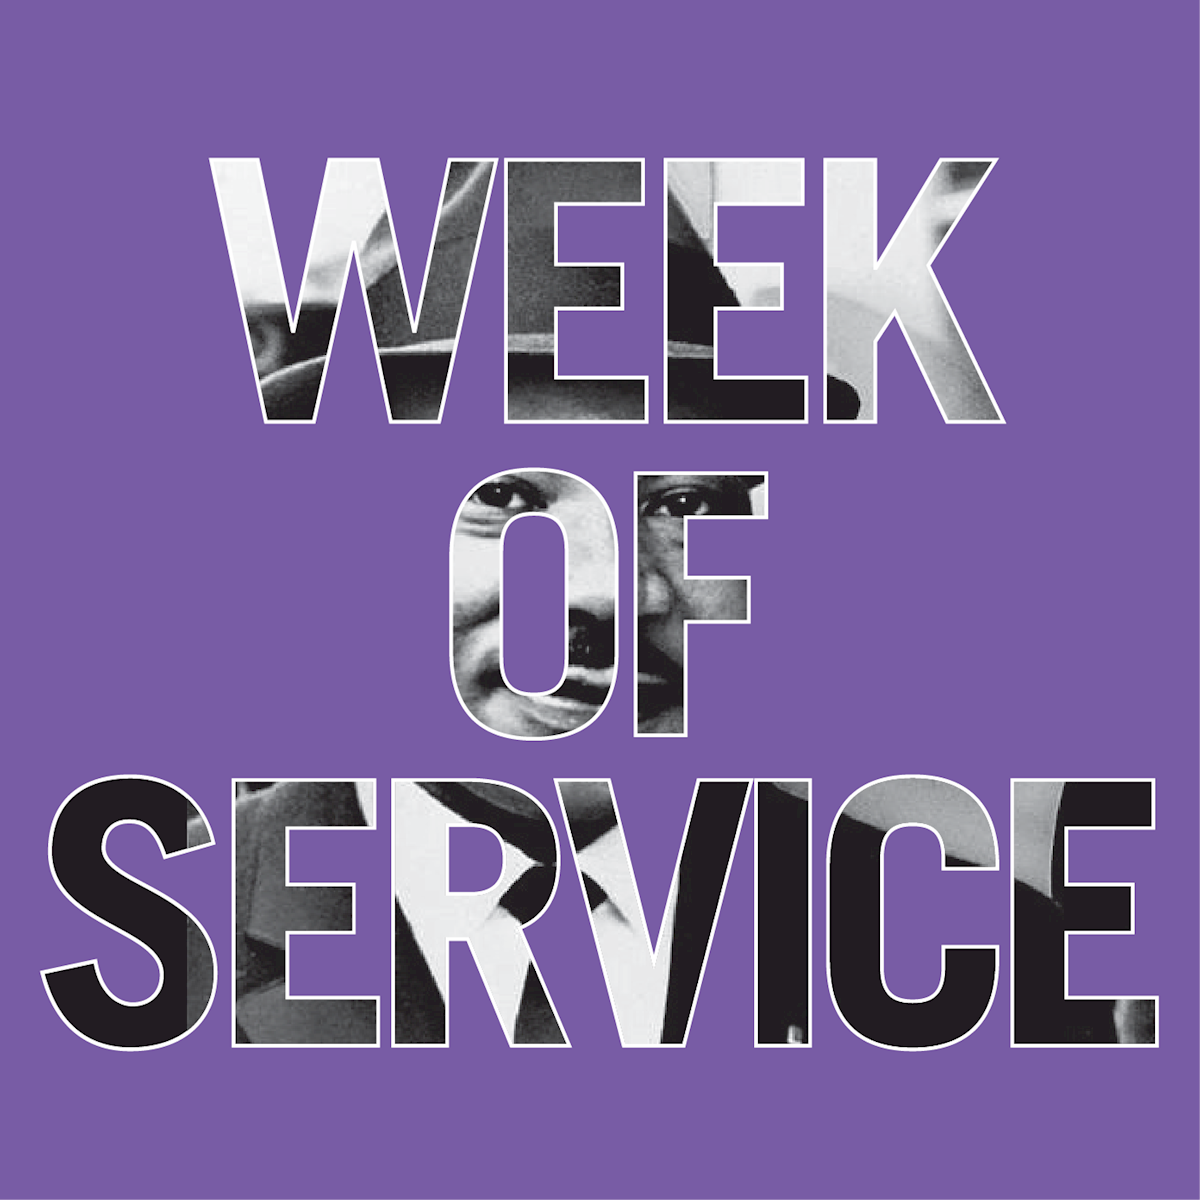 MLK - Week of Service image